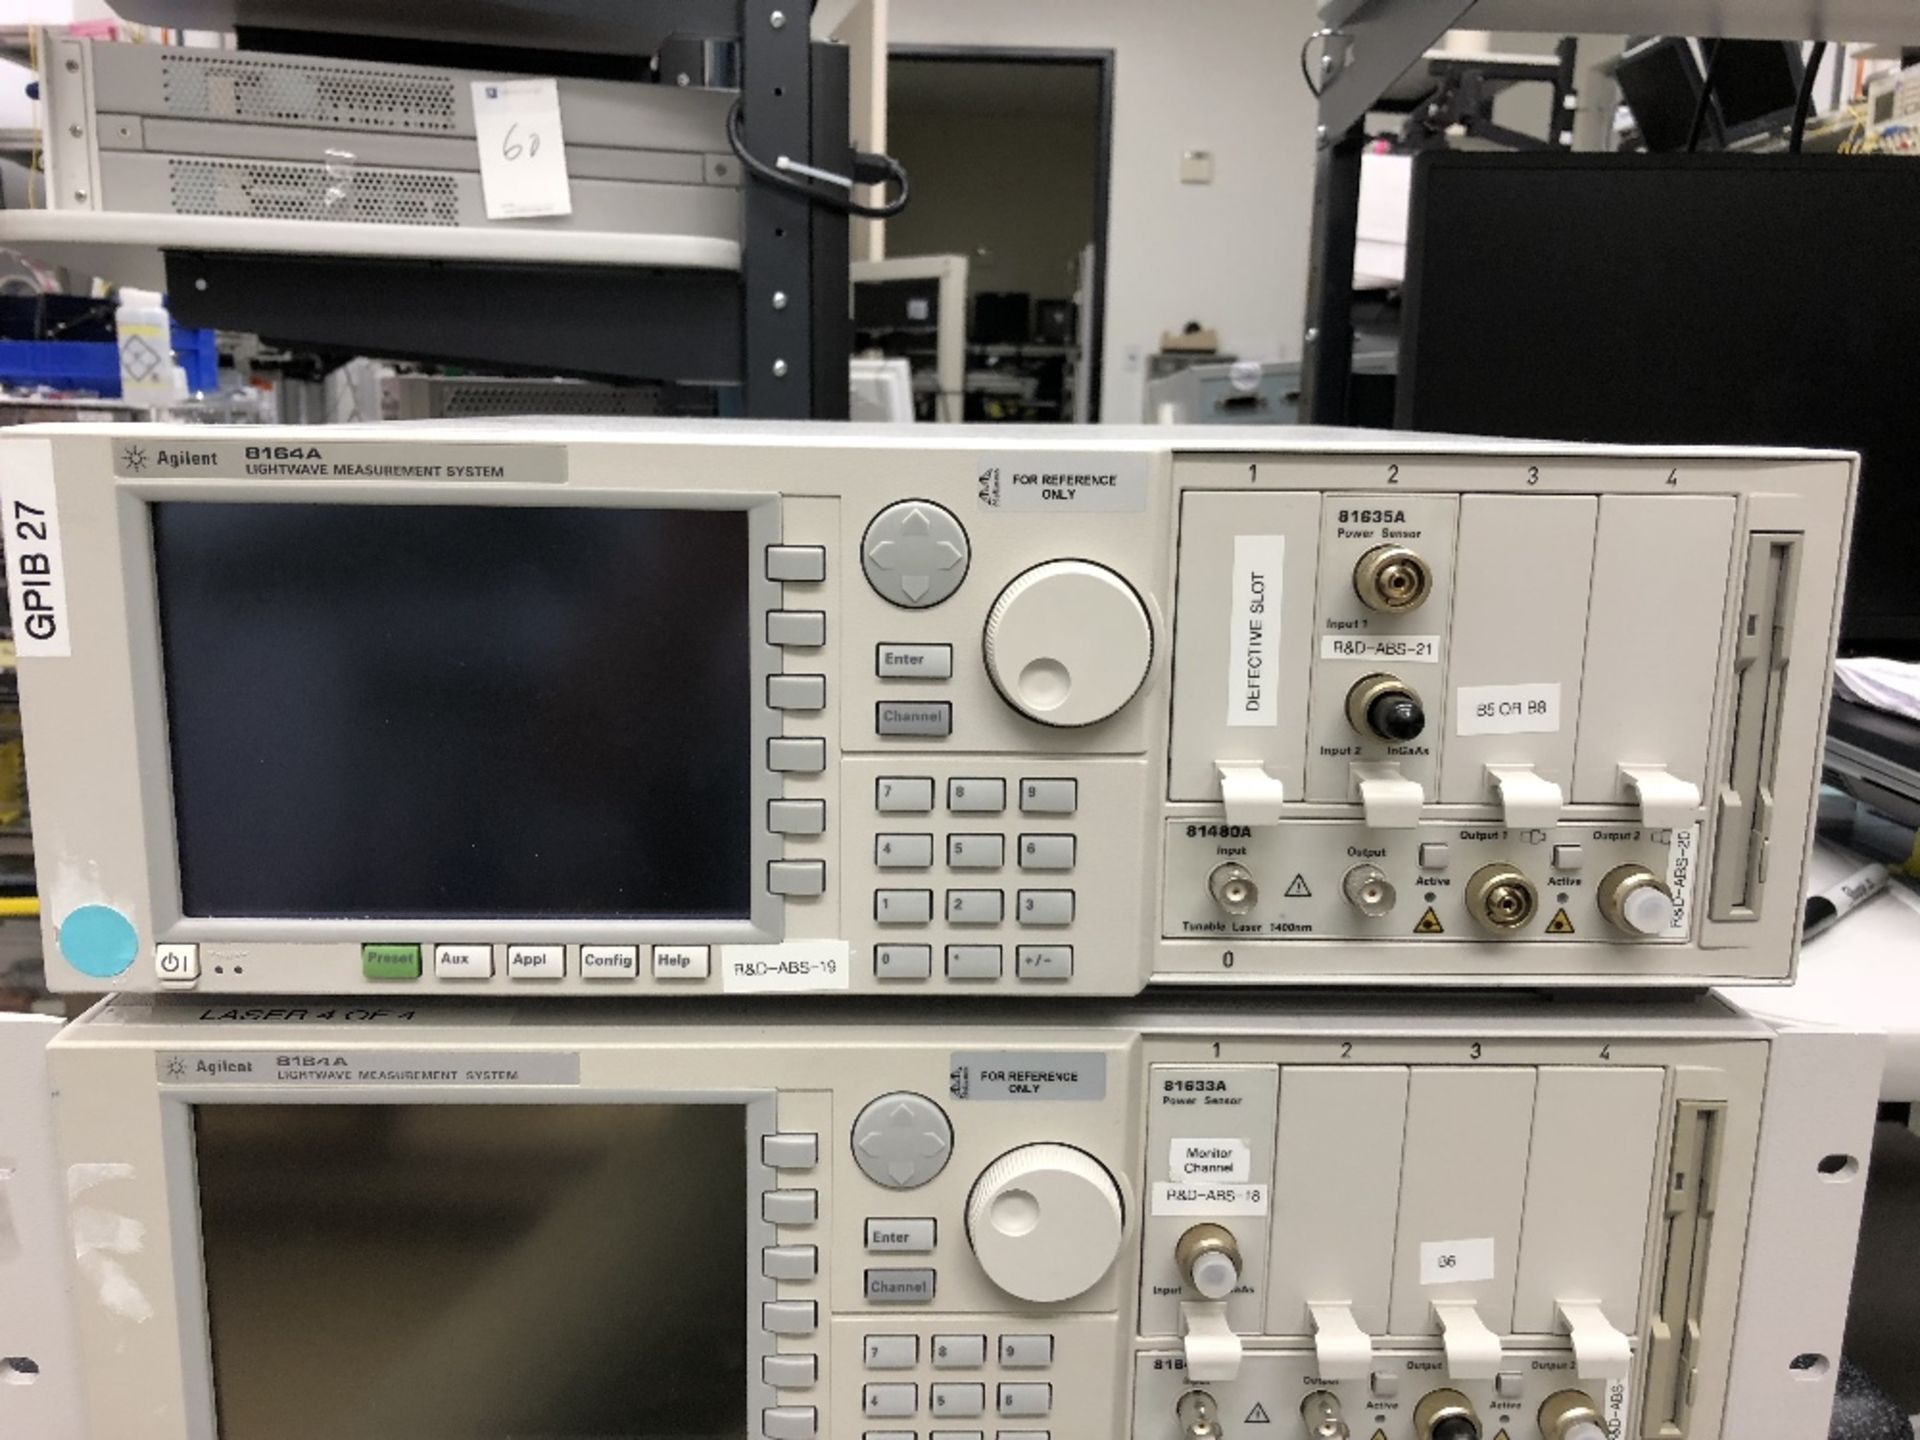 Agilent 8164A Lightwave Measurement System, (1) 81635A Power Sensor, (1) 81640A Tunable Laser